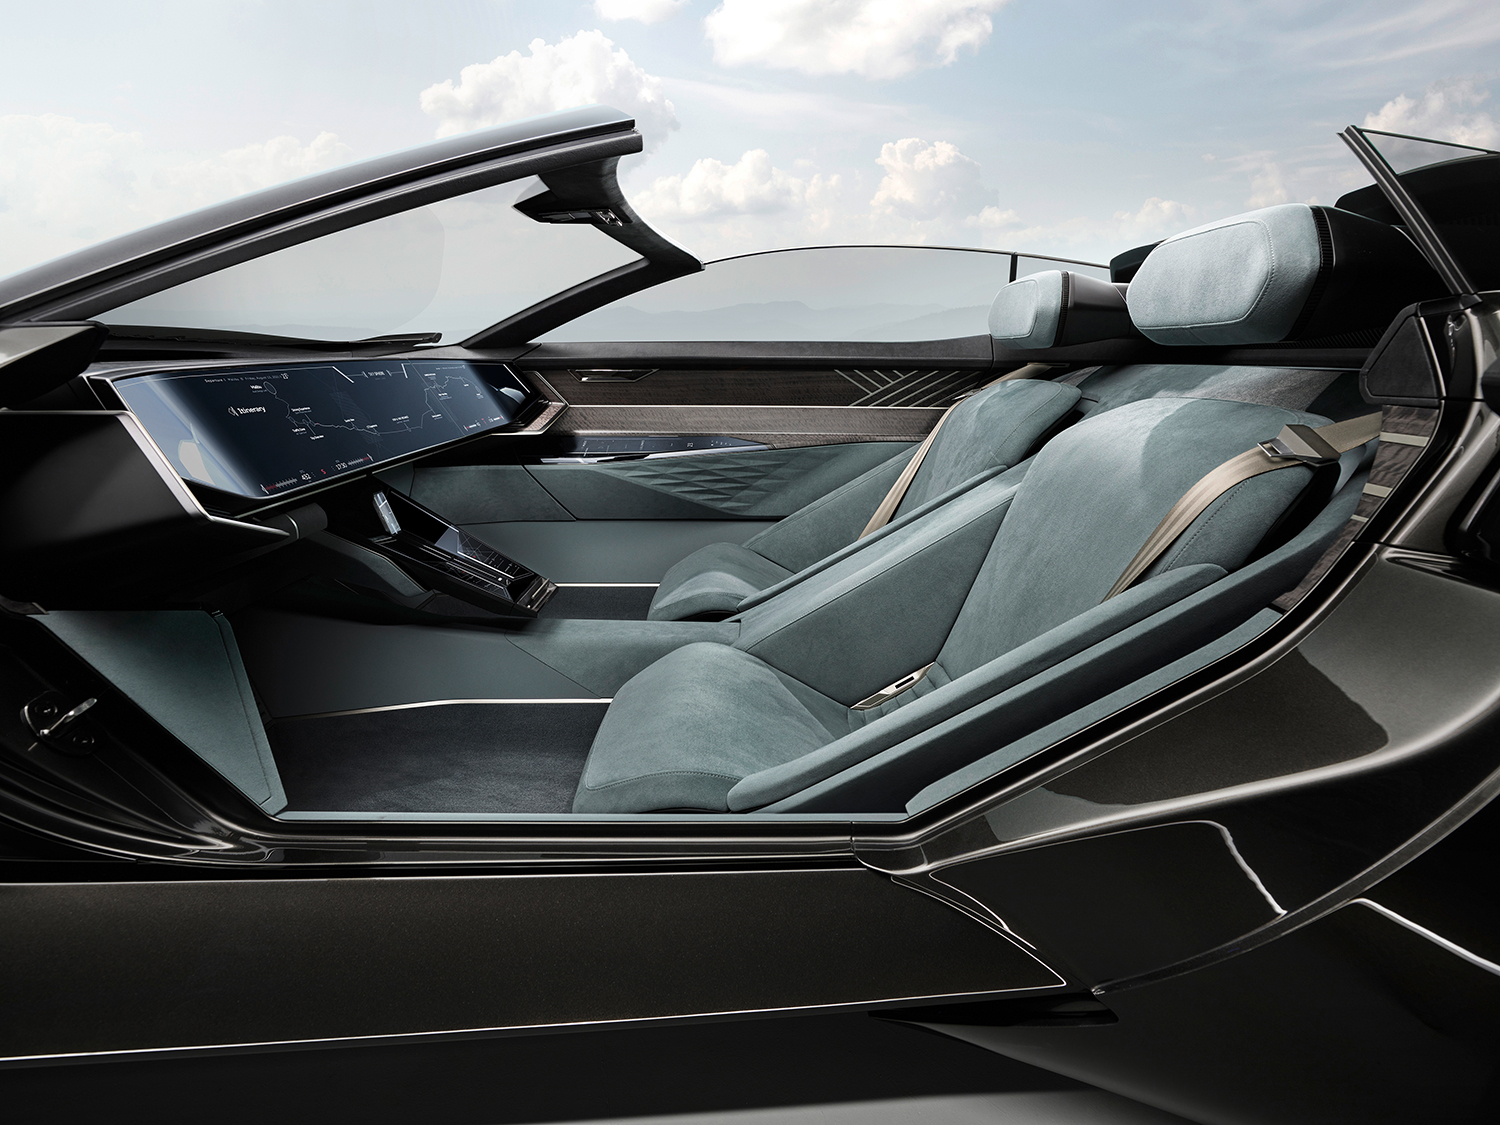 AUDI Reveal Shape-shifting Skysphere Roadster Concept